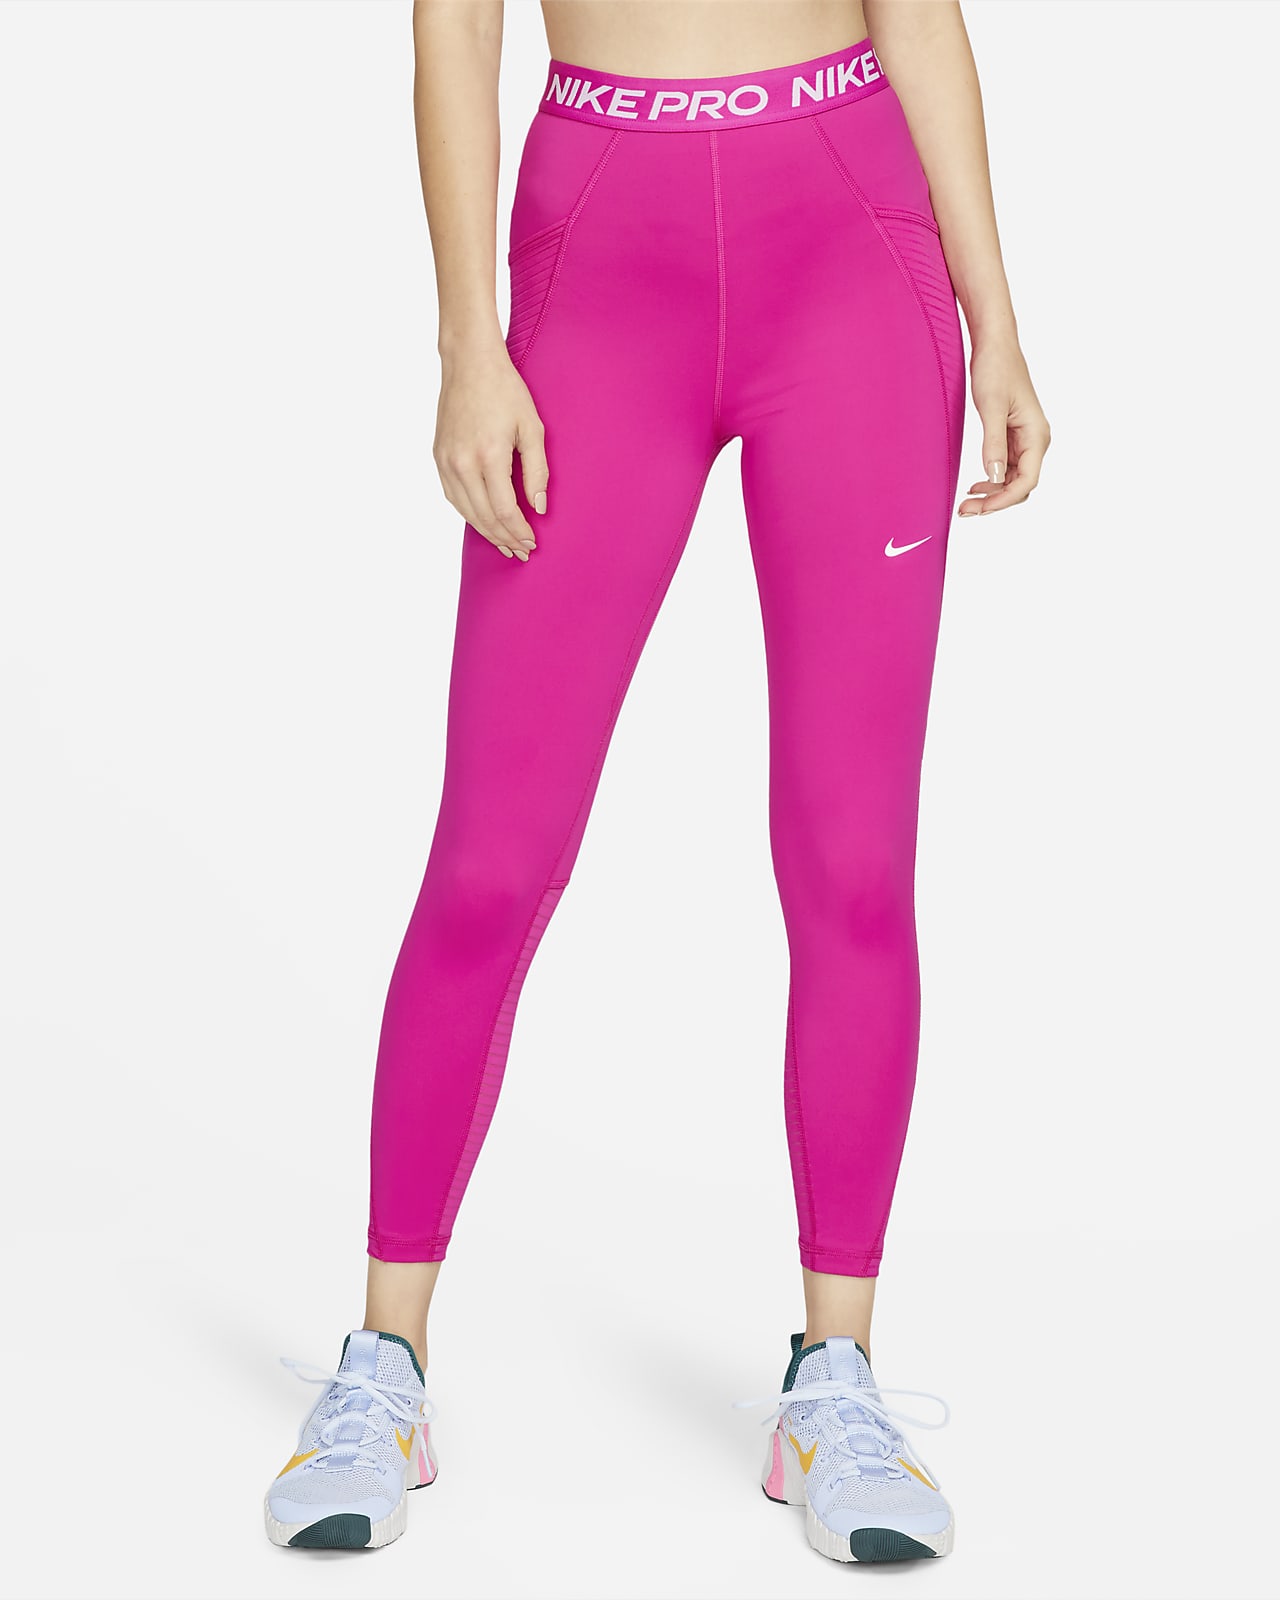 Ladies Nike Pro Leggings Pink Leggings M